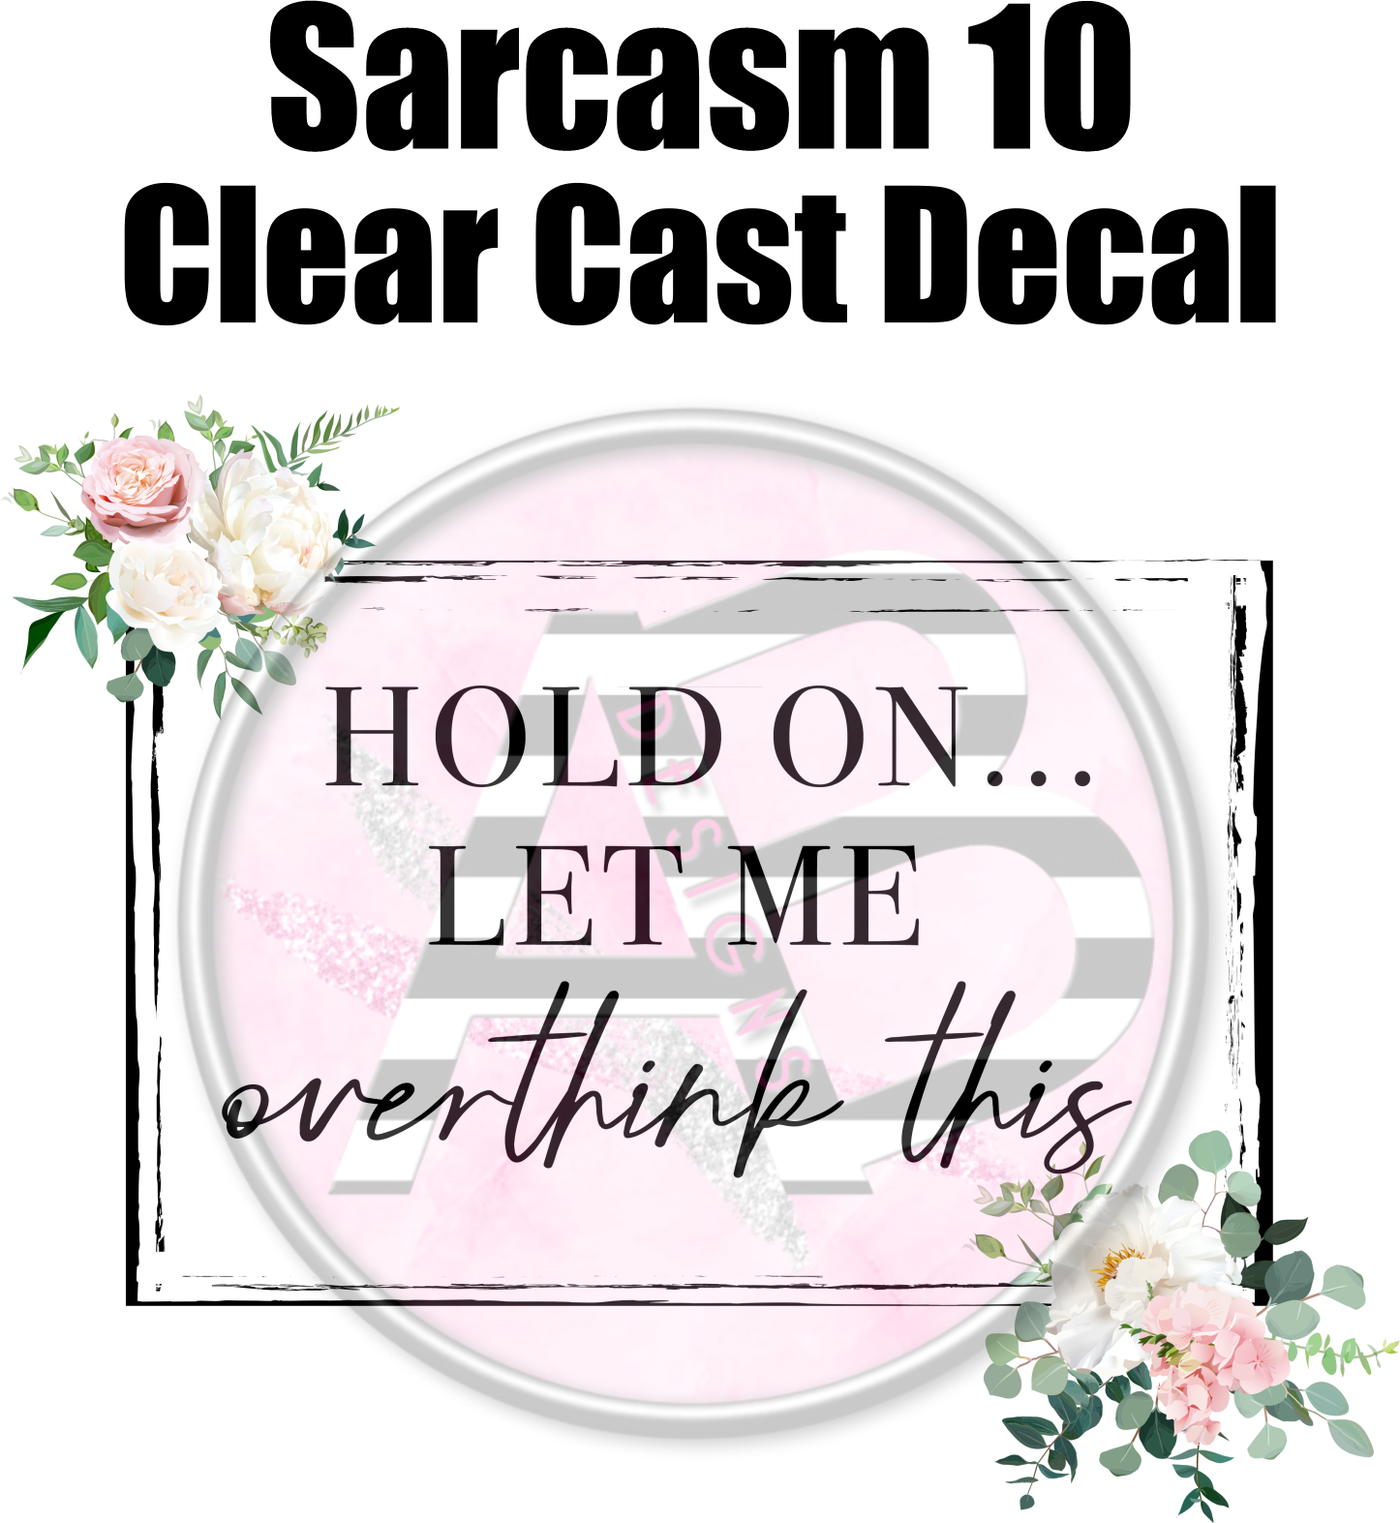 Sarcasm 10 - Clear Cast Decal